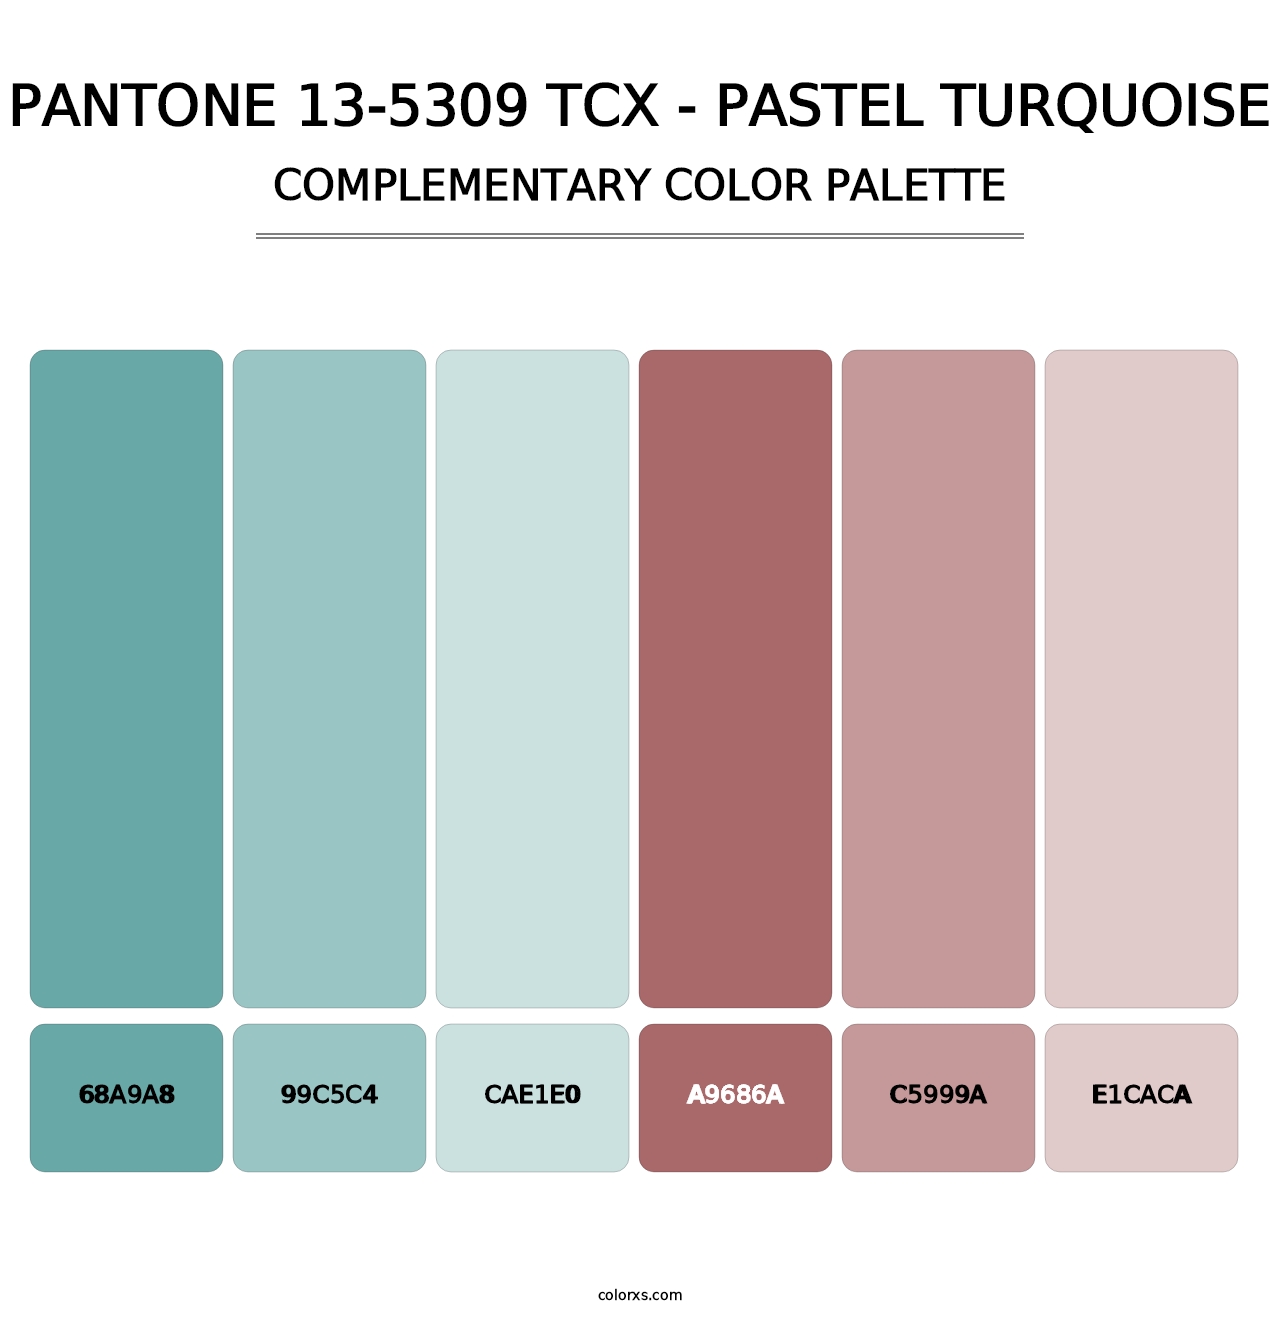 PANTONE 13-5309 TCX - Pastel Turquoise - Complementary Color Palette